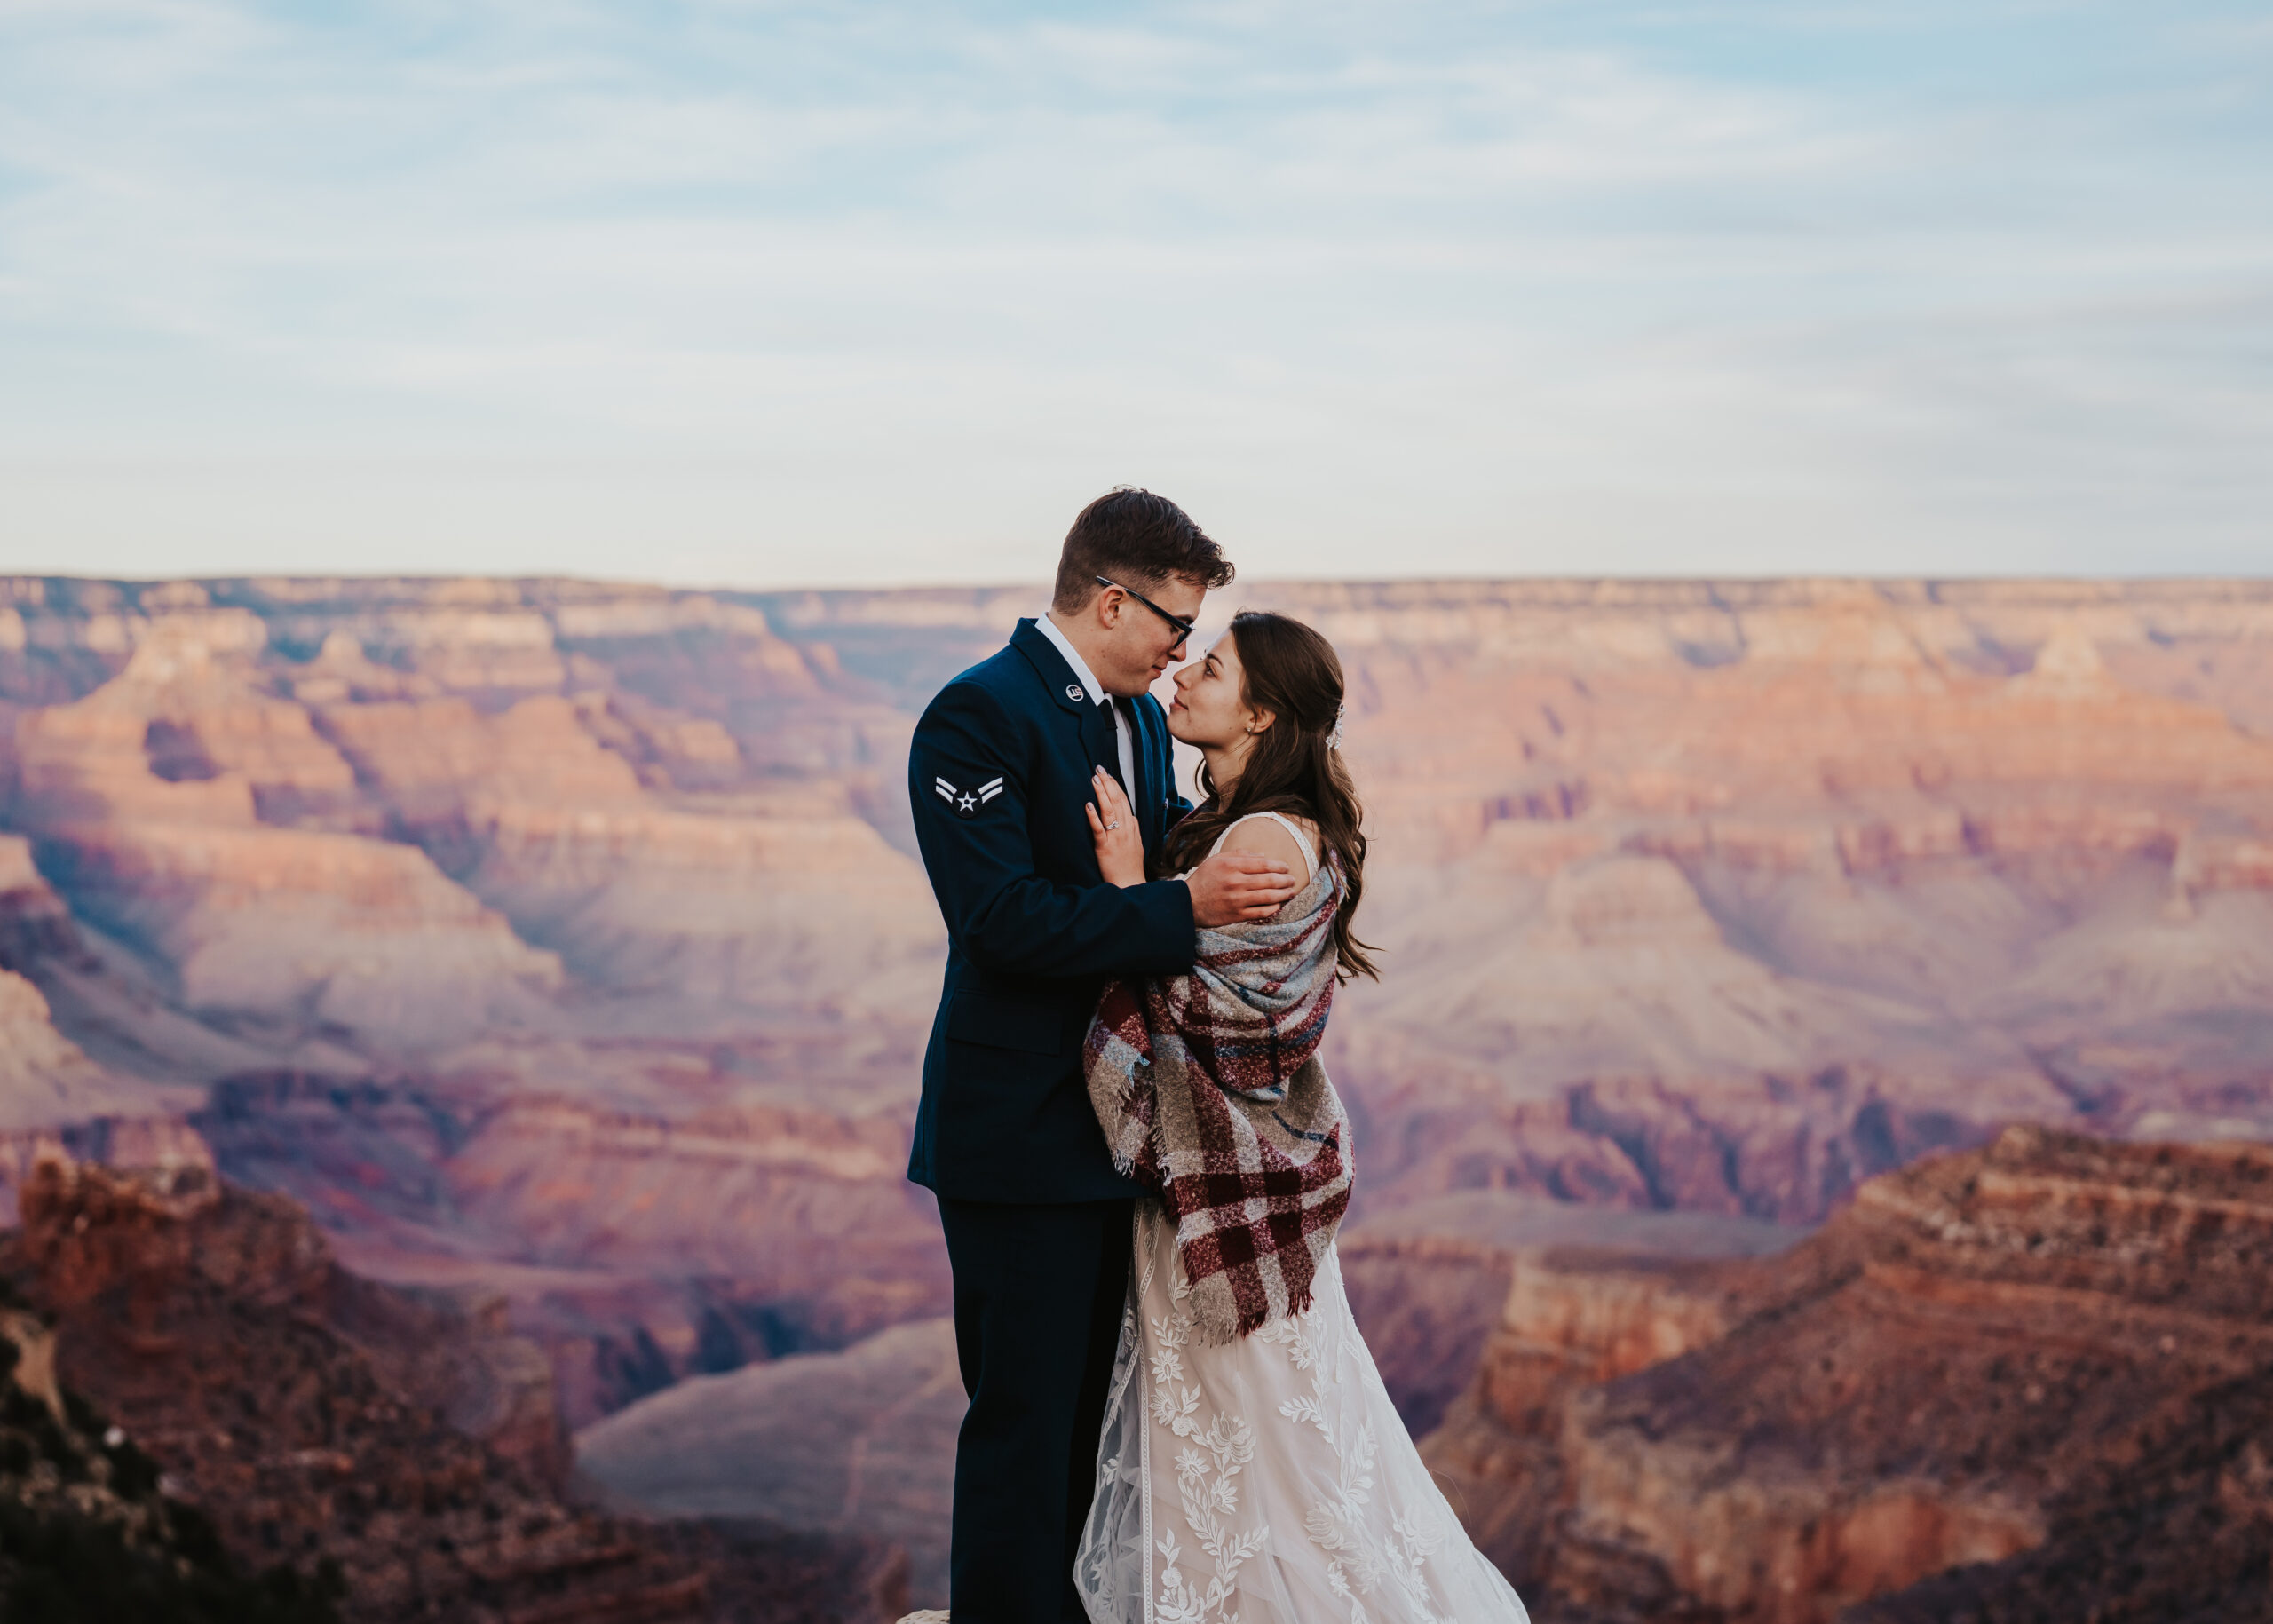 Bridal portraits at sunset after a grand canyon wedding